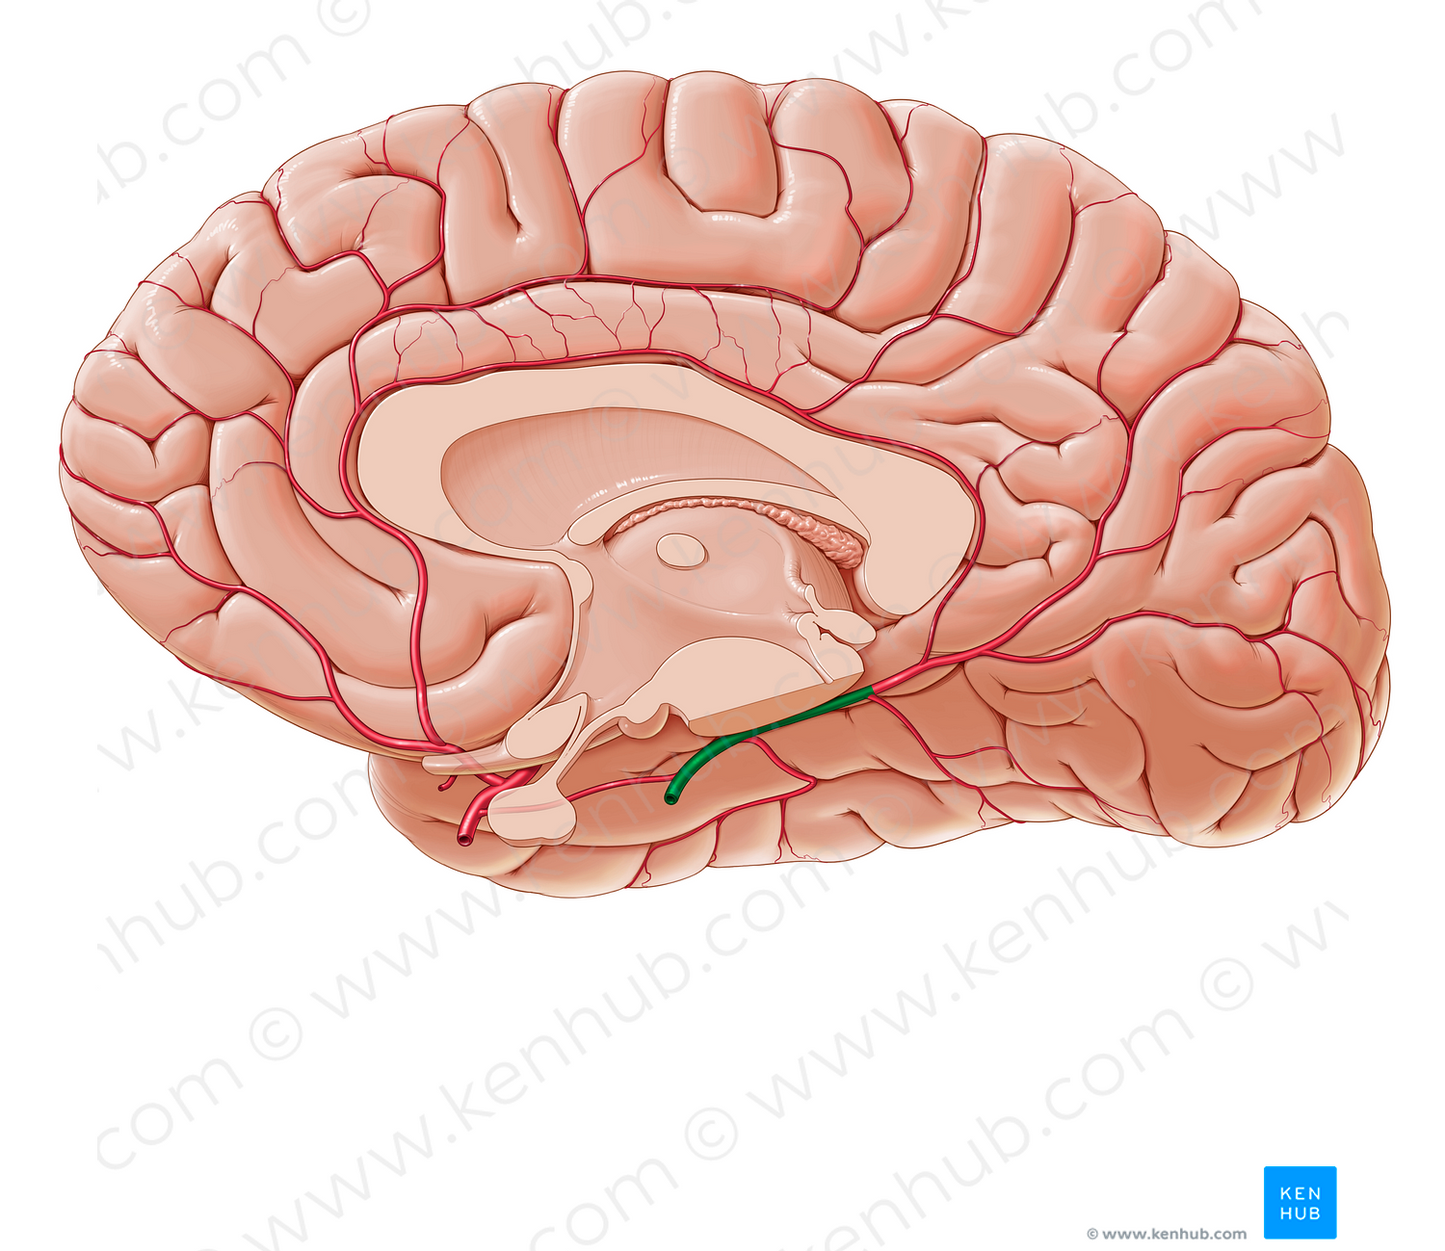 Posterior cerebral artery (#1021)